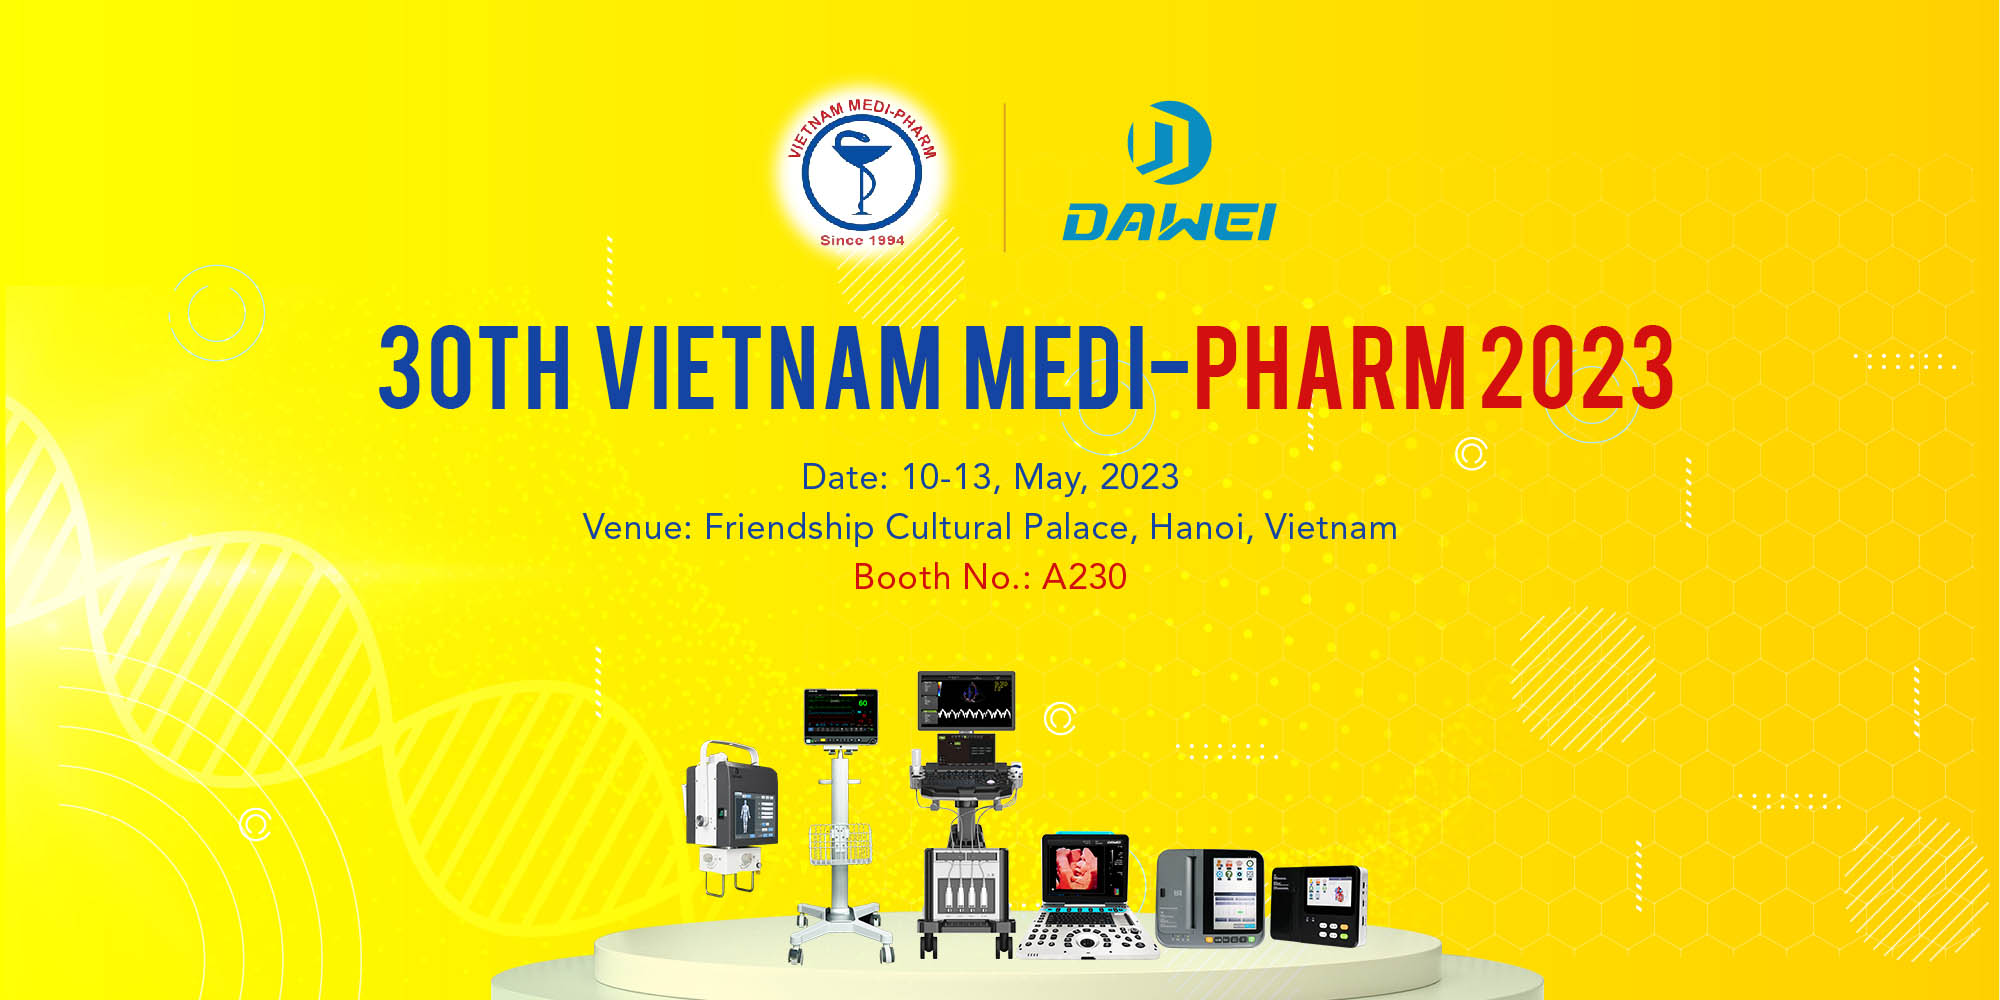 dawei медициналык 30TH Vietnam Medi-Pharm 2023 катышат